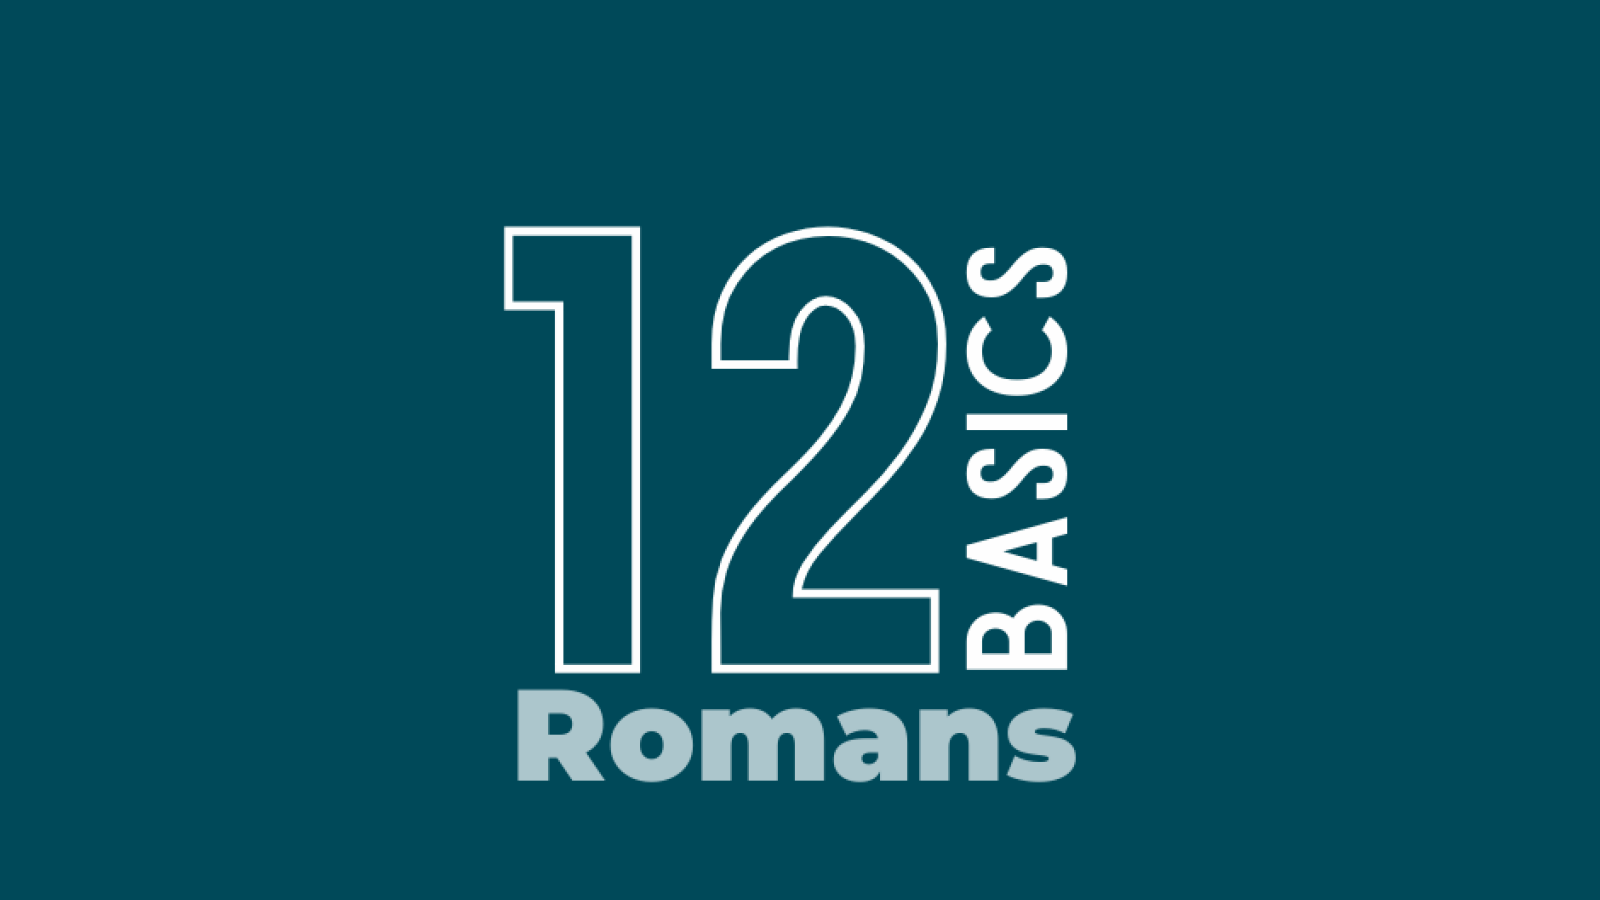 12 Basics of Romans